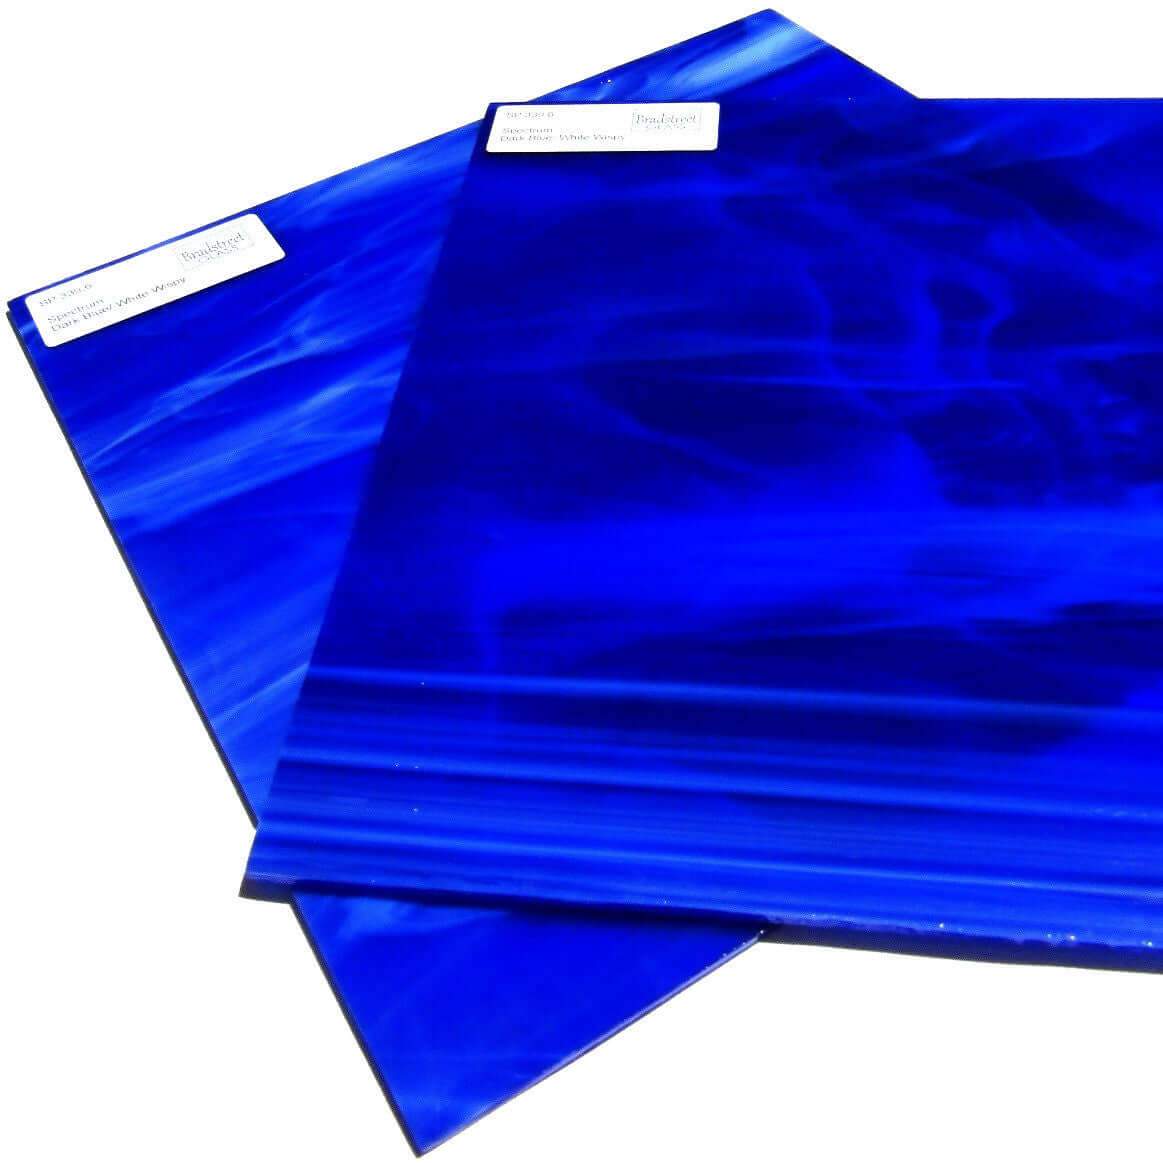 Spectrum SP 339.6 Dark Blue and White Wispy Stained Glass Sheet Opaque Streaky Swirled